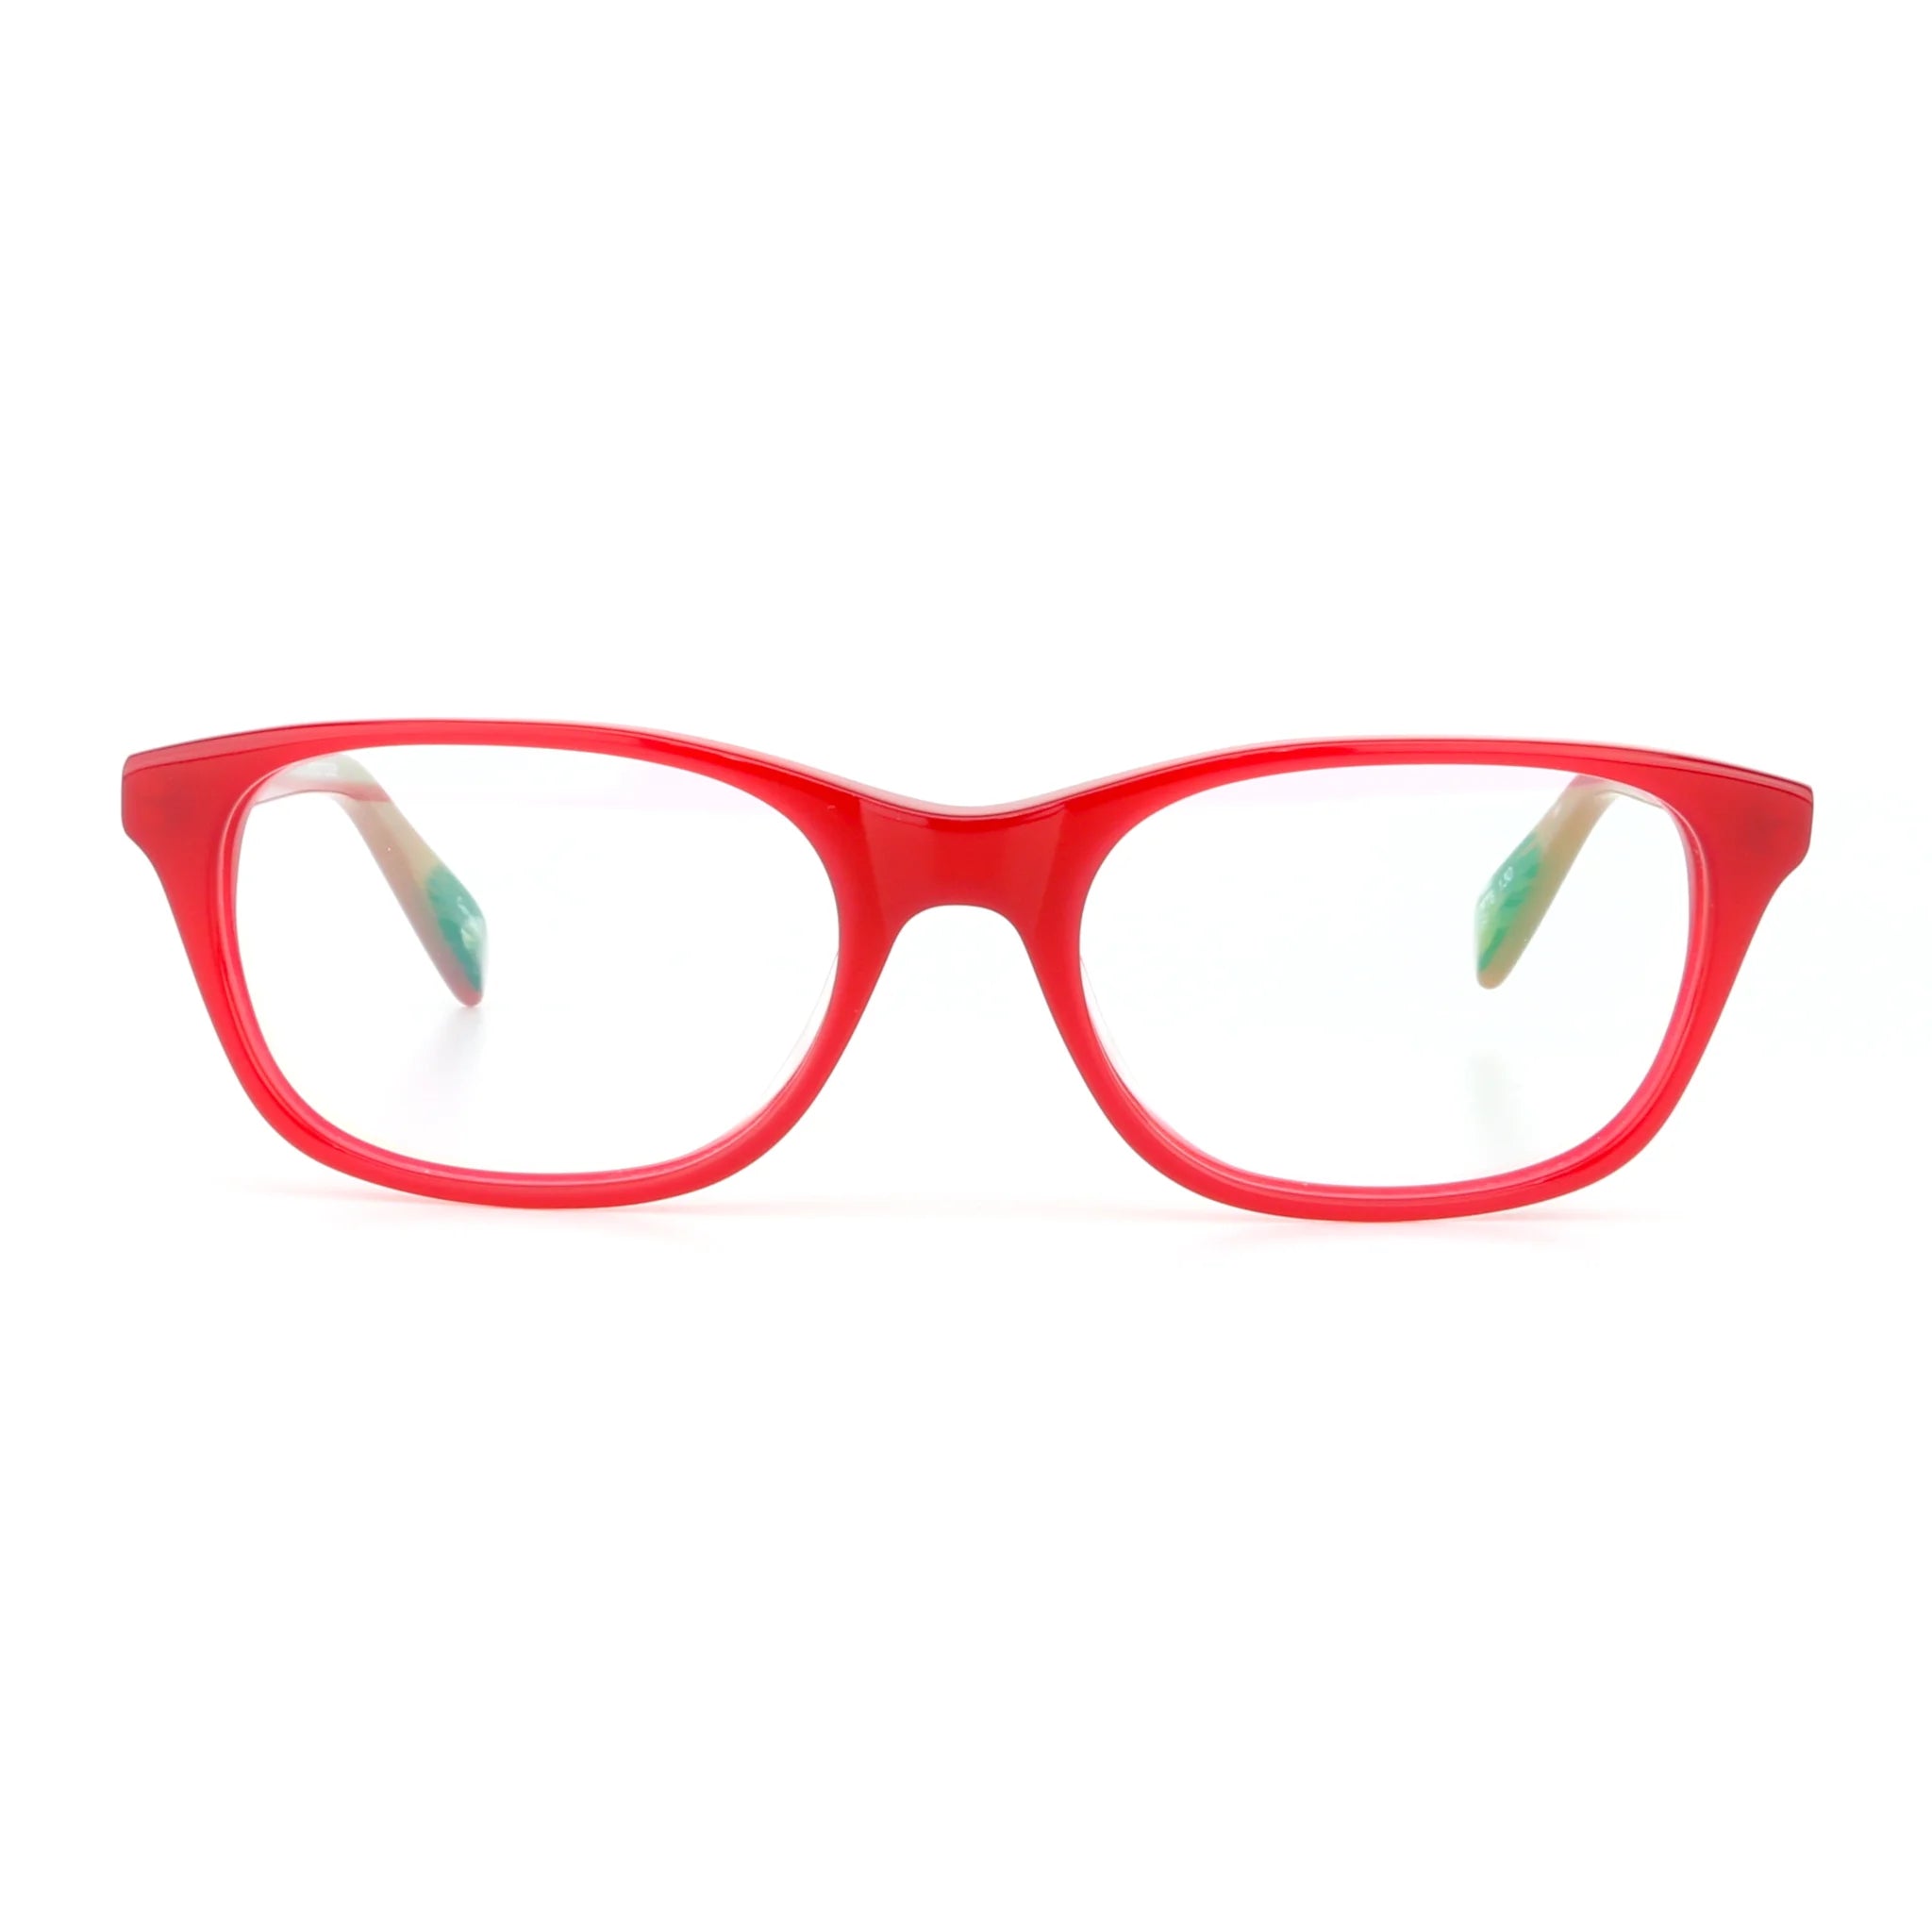 The Optical Co good prescription eyeglasses online